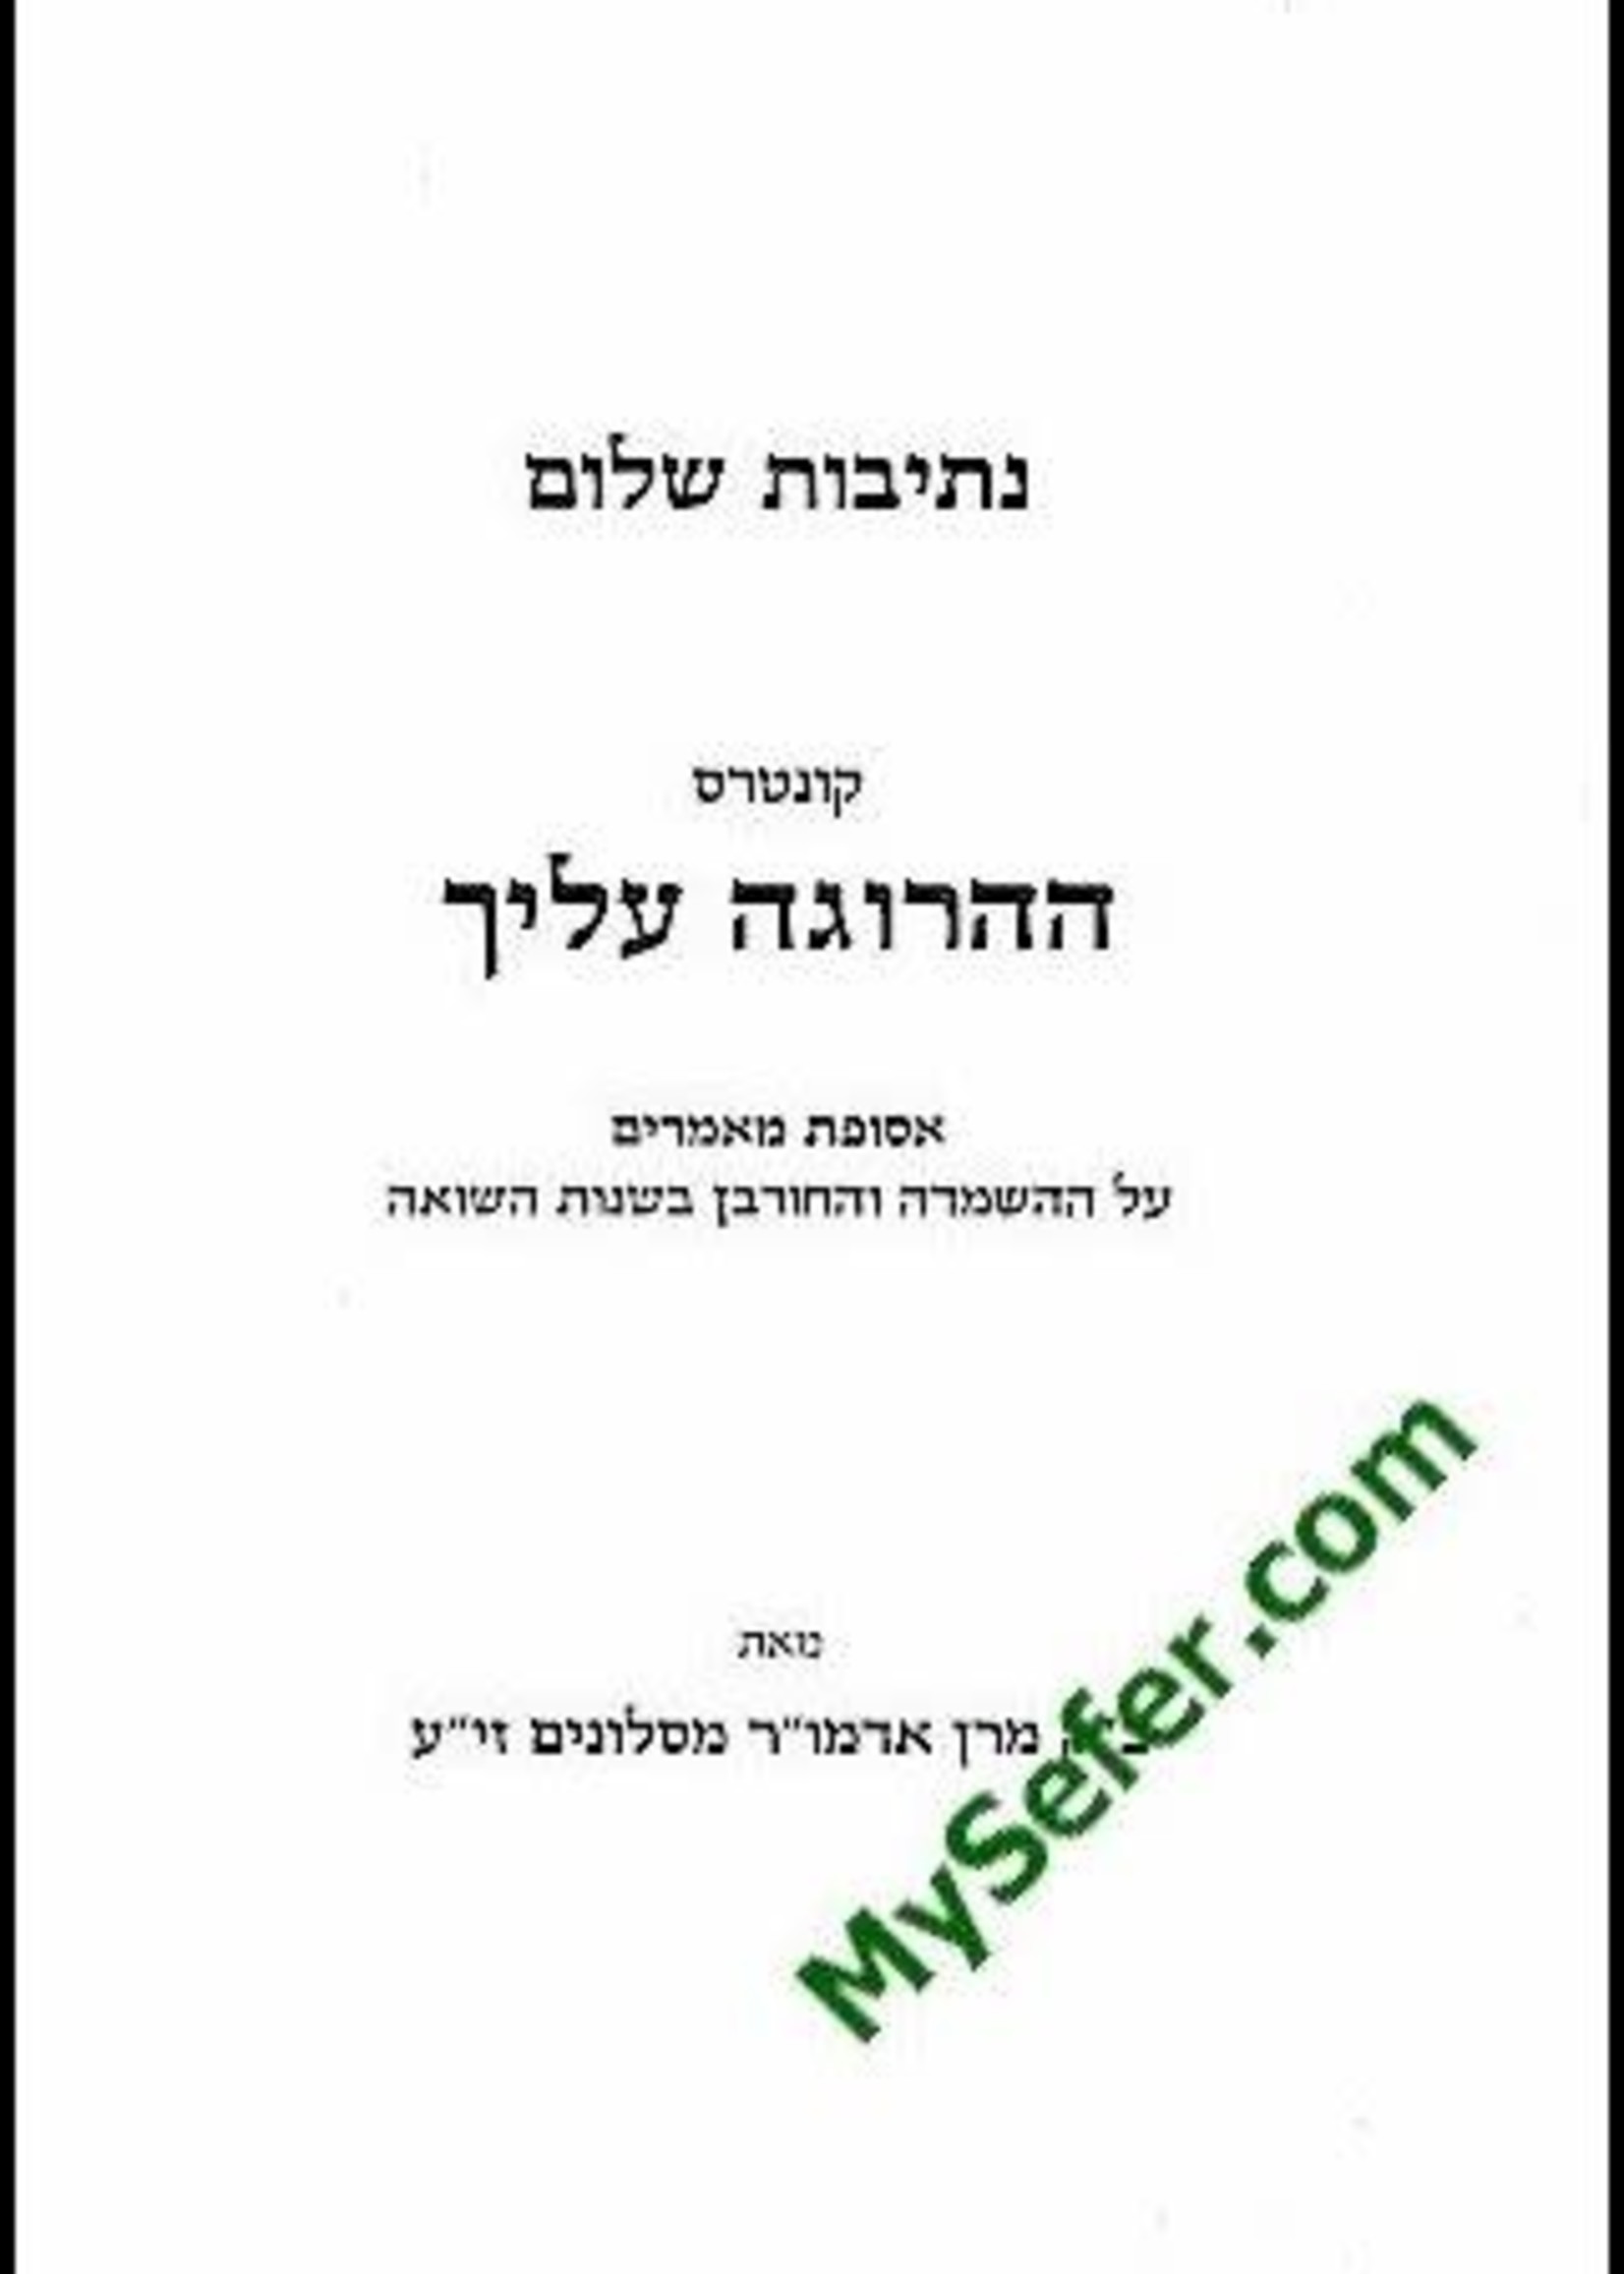 Netivot Shalom - HaHarugah Aleicha (Slonimer Rebbe)/  נתיבות שלום - ההרוגה עליך - כ"ר